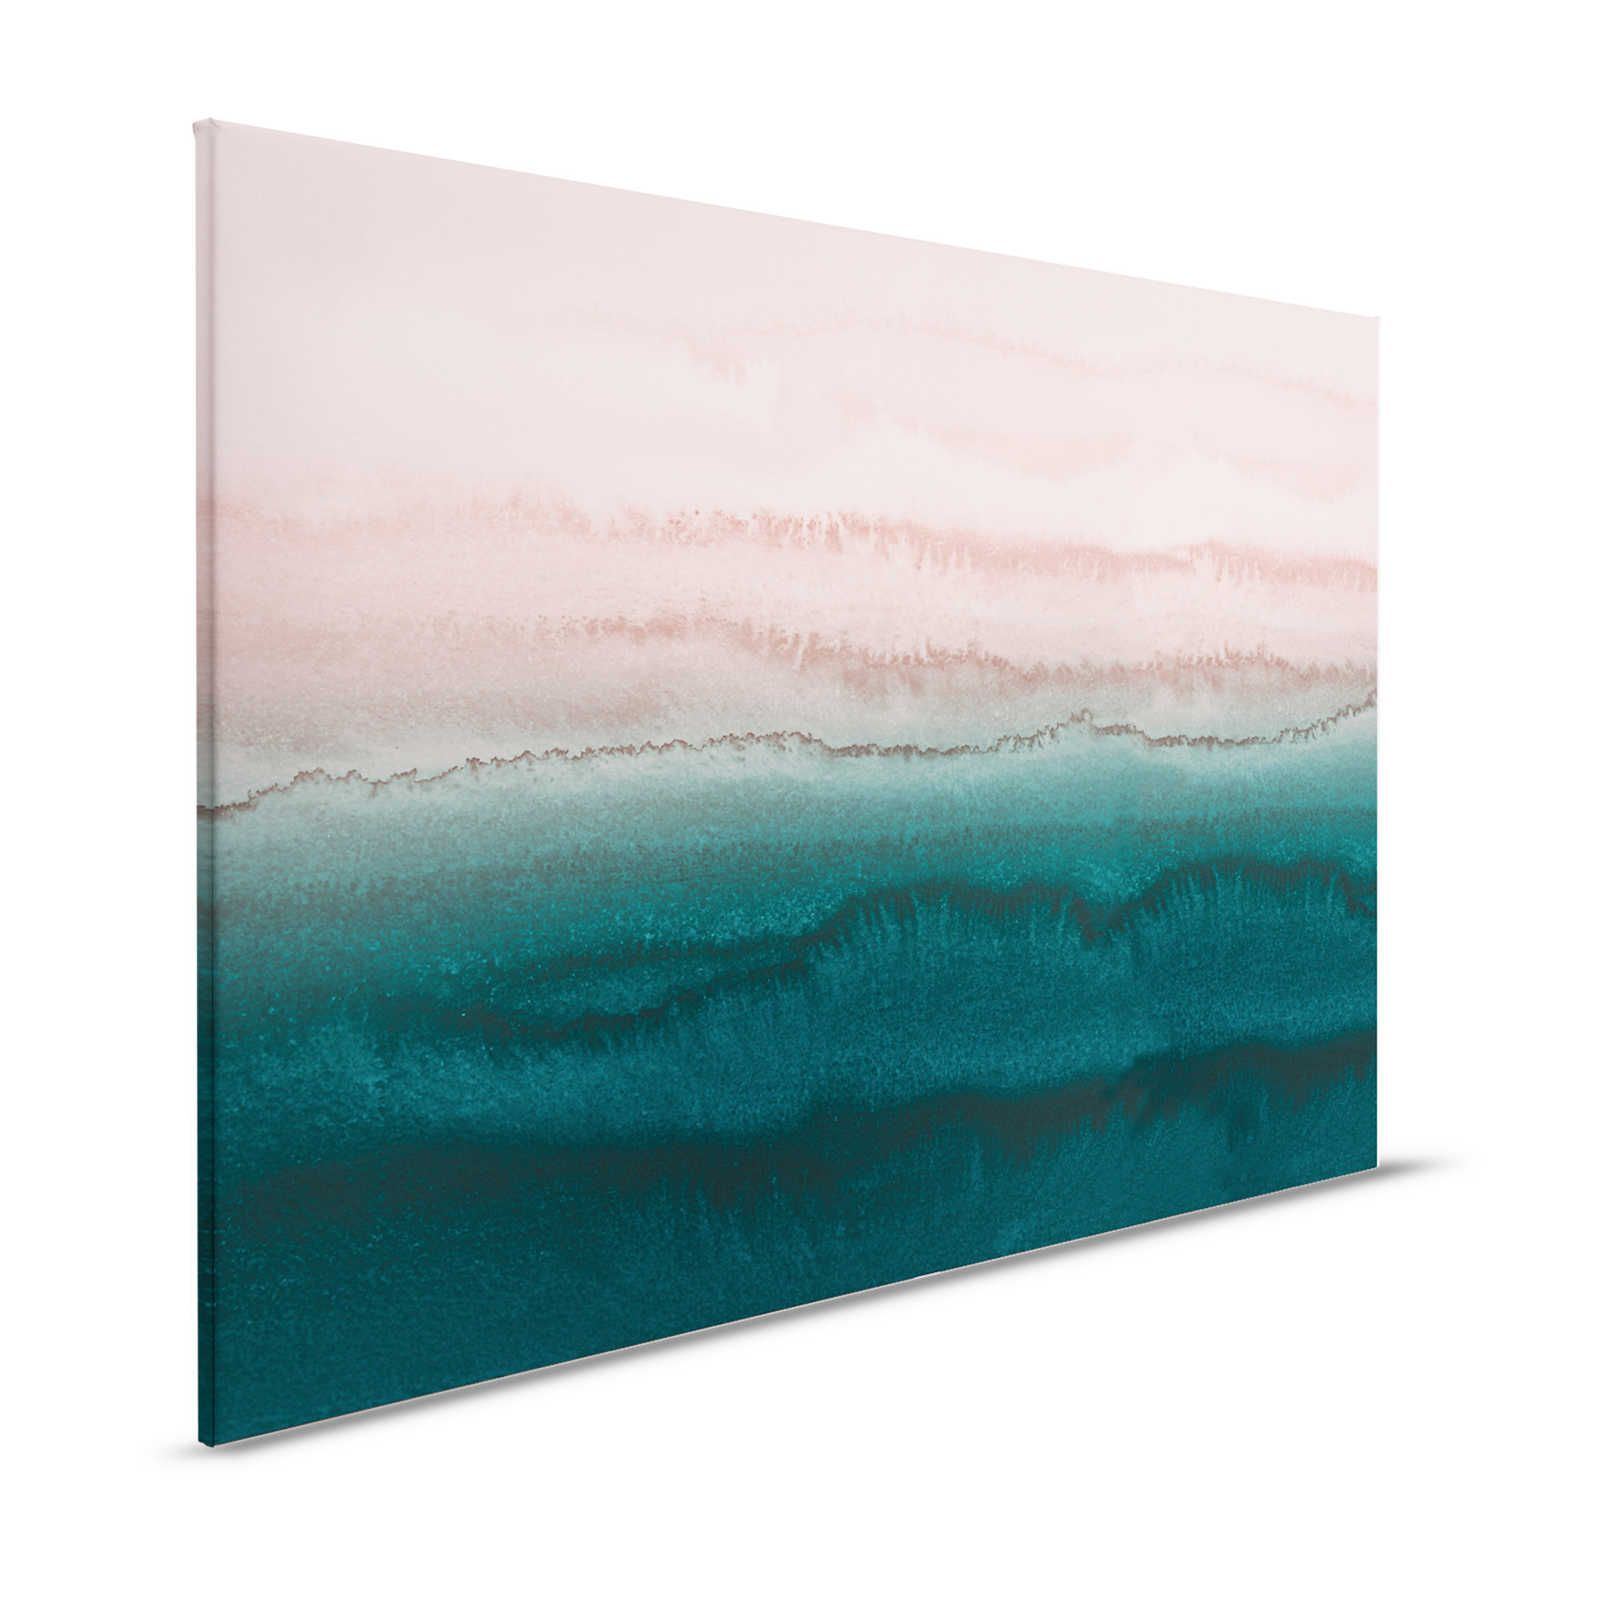 Lienzo Mareas con acuarela abstracta - 1,20 m x 0,80 m
